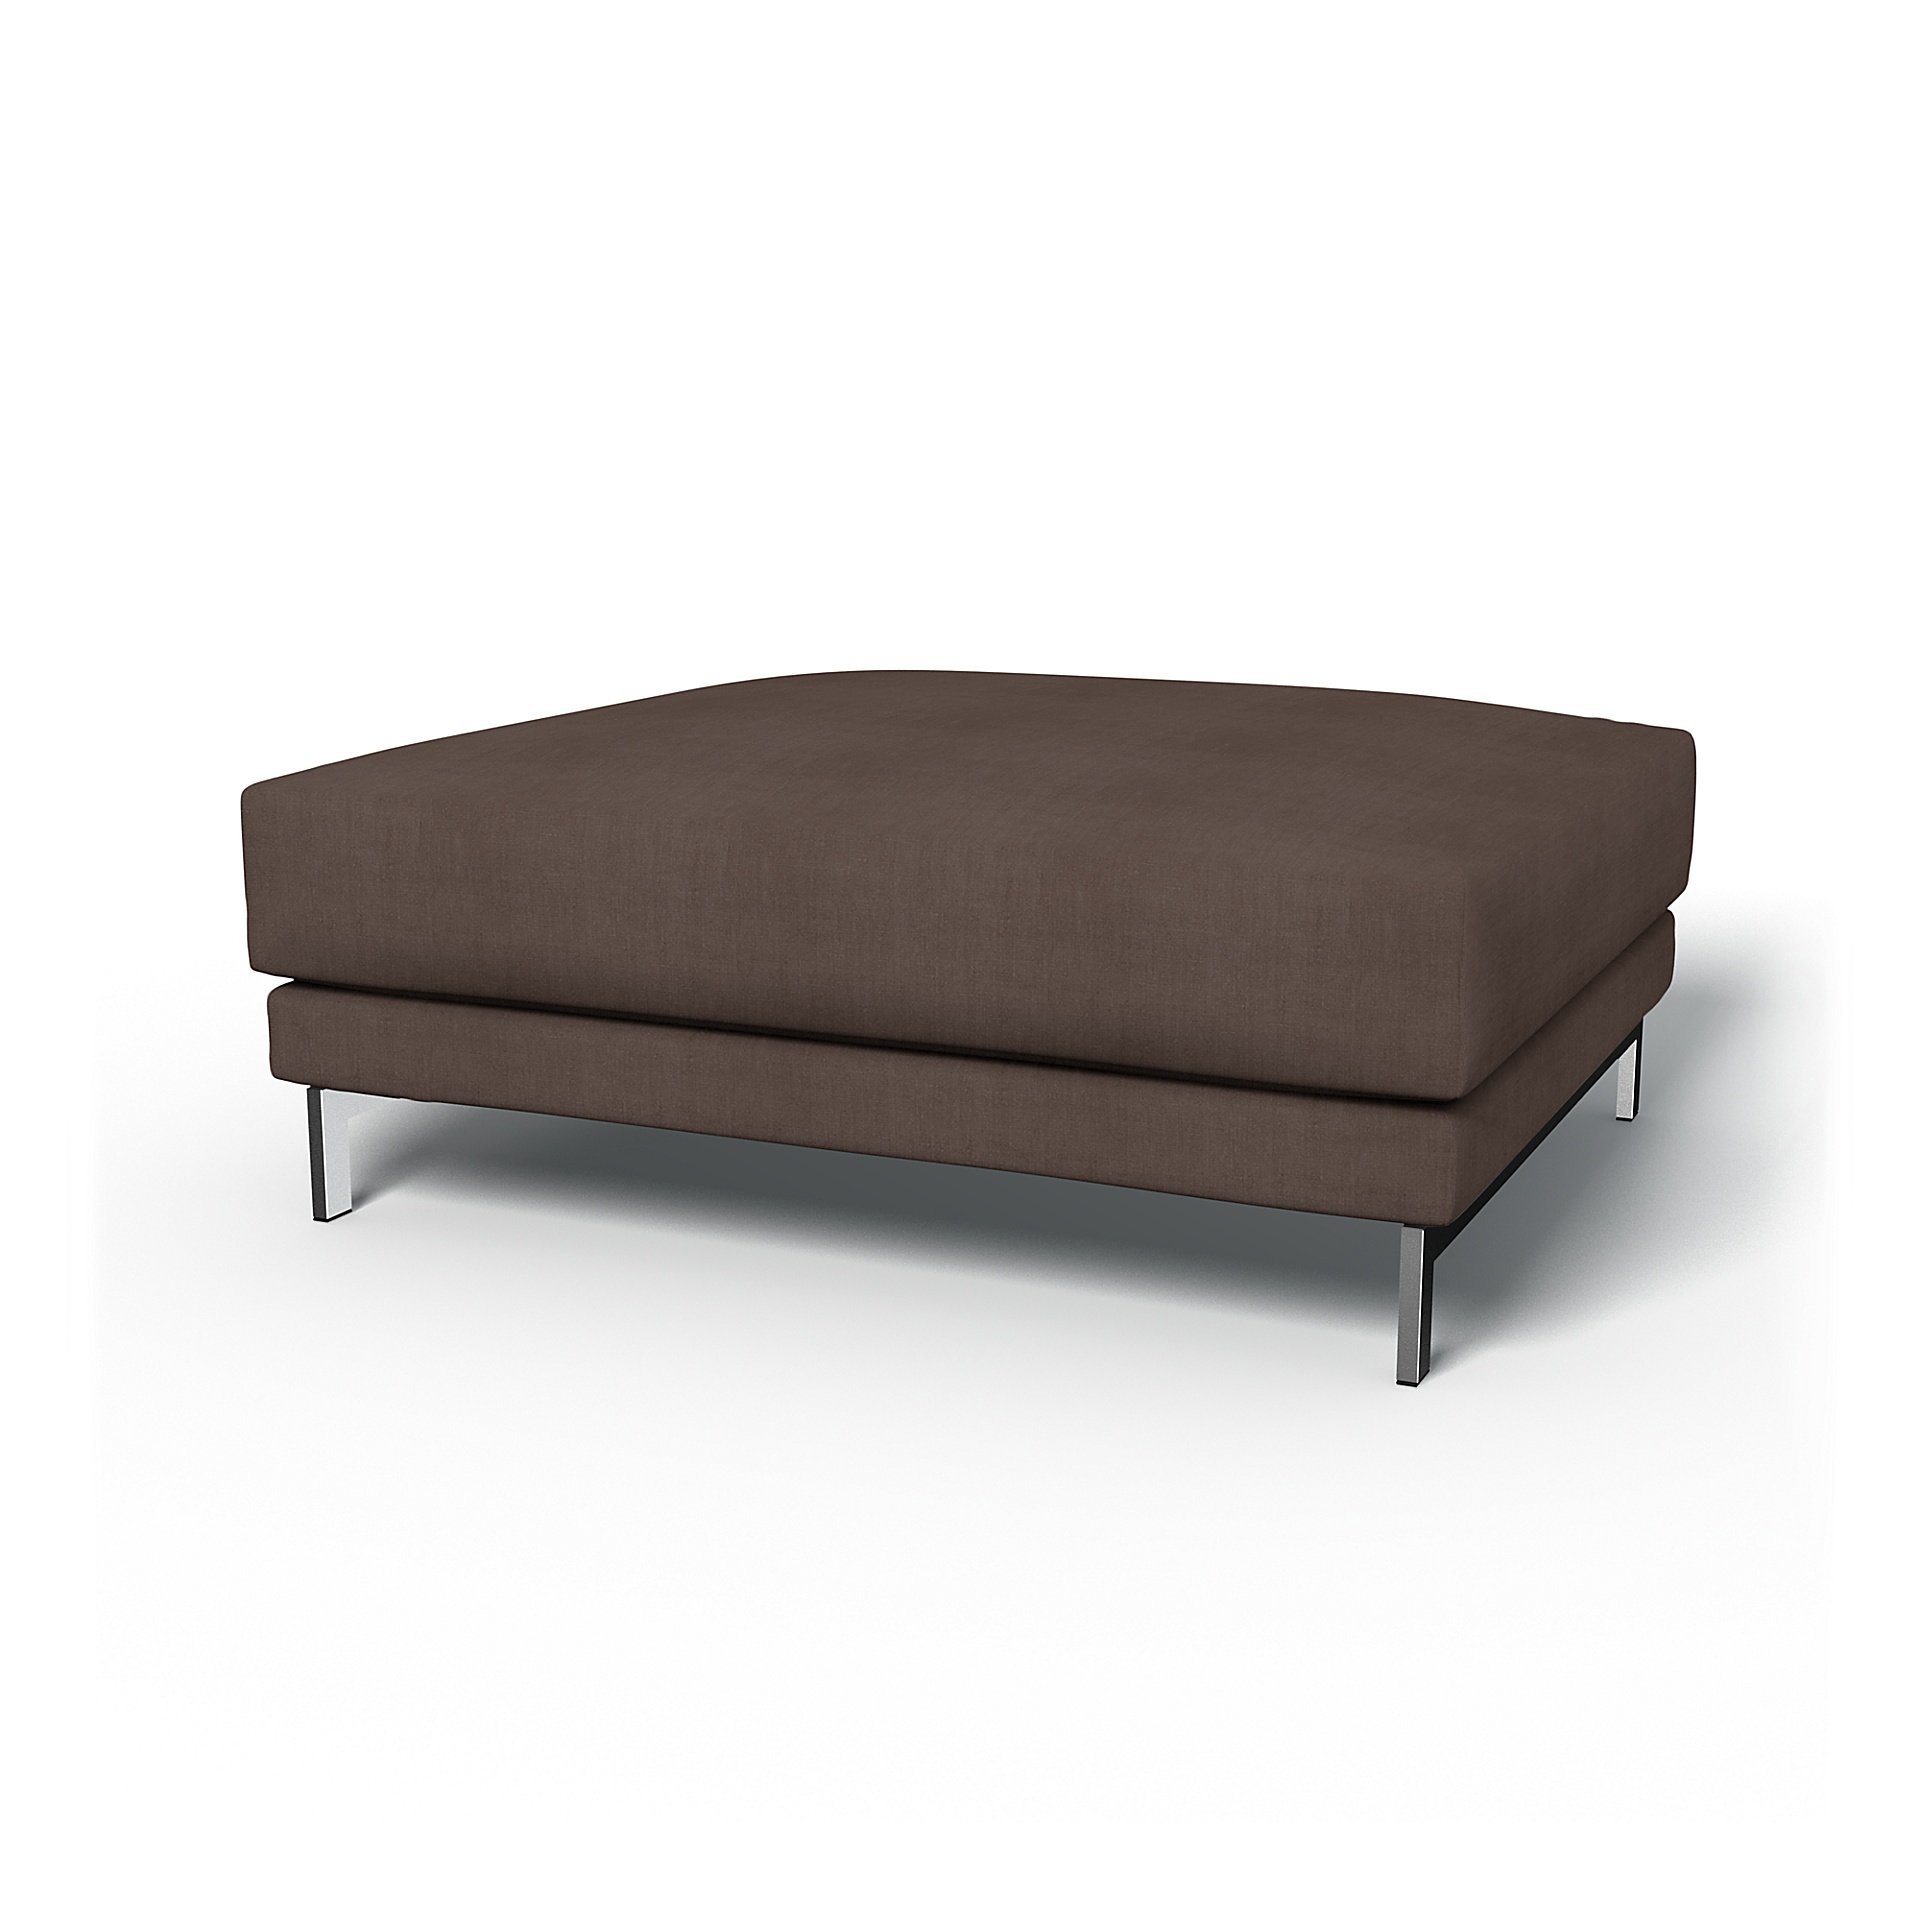 IKEA - Nockeby Footstool Cover, Cocoa, Linen - Bemz